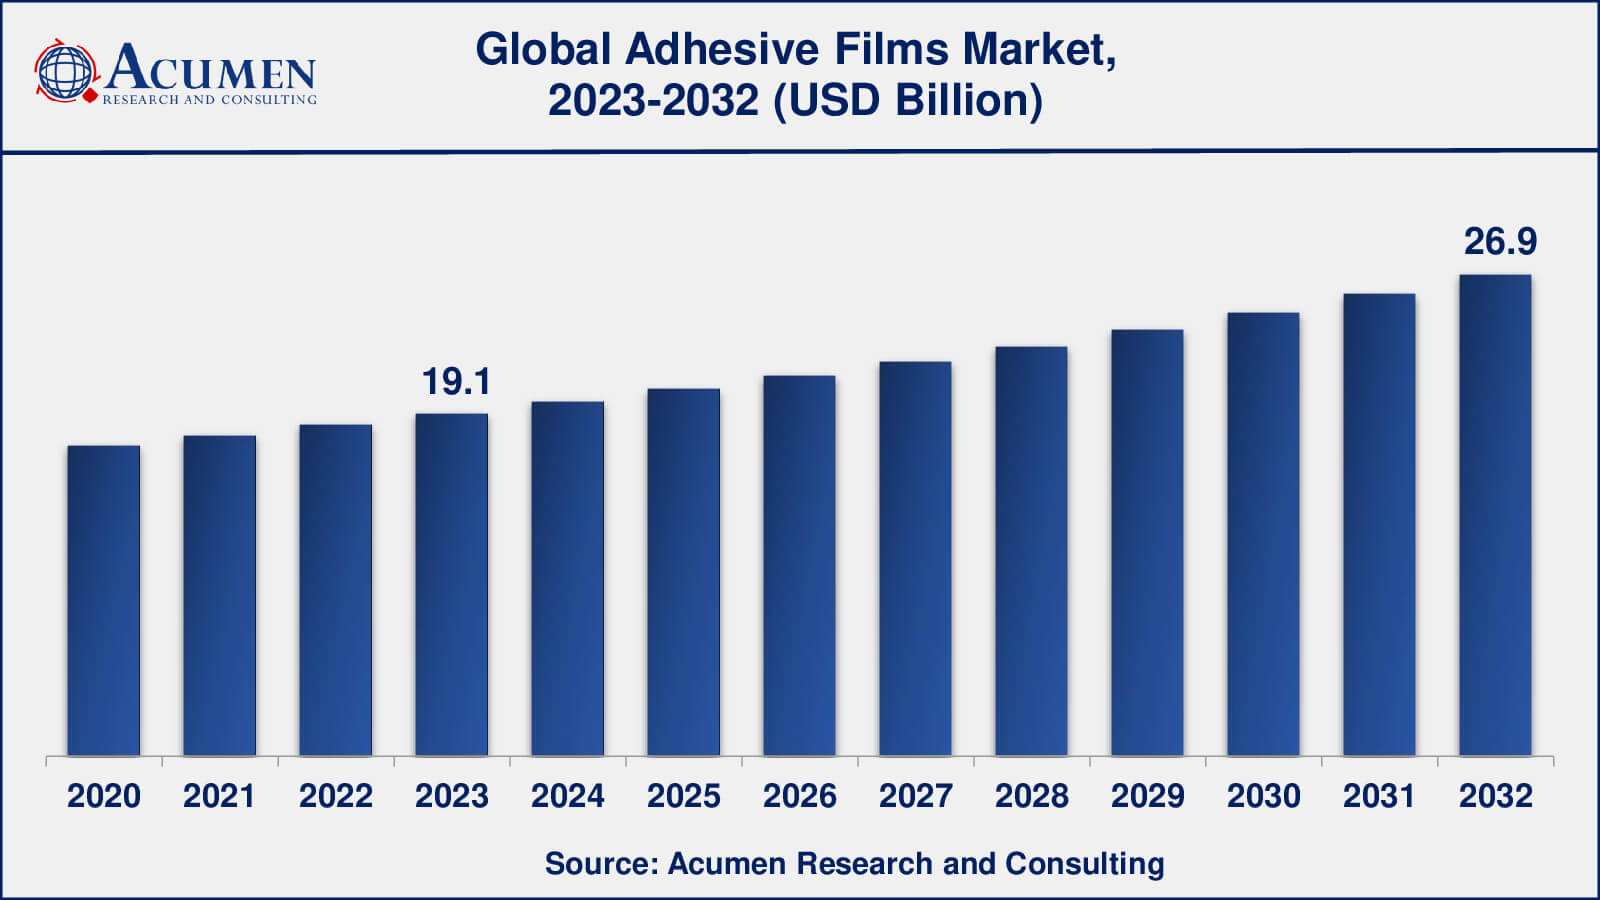 Global Adhesive Films Market Dynamics